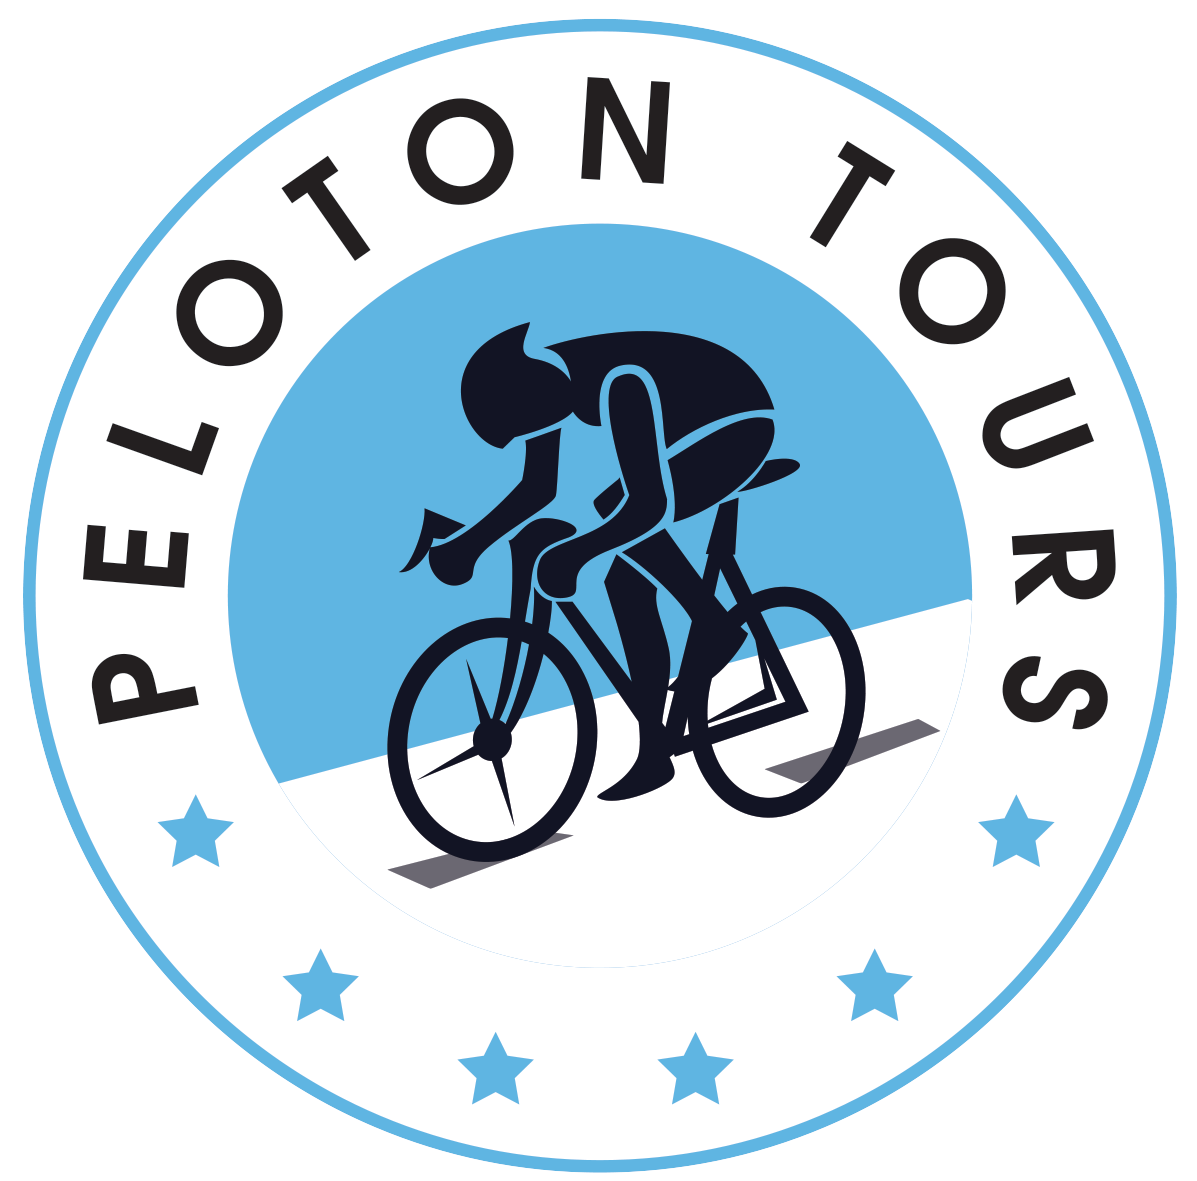 Australian corporate cycling tours. Clipart bicycle bike tour